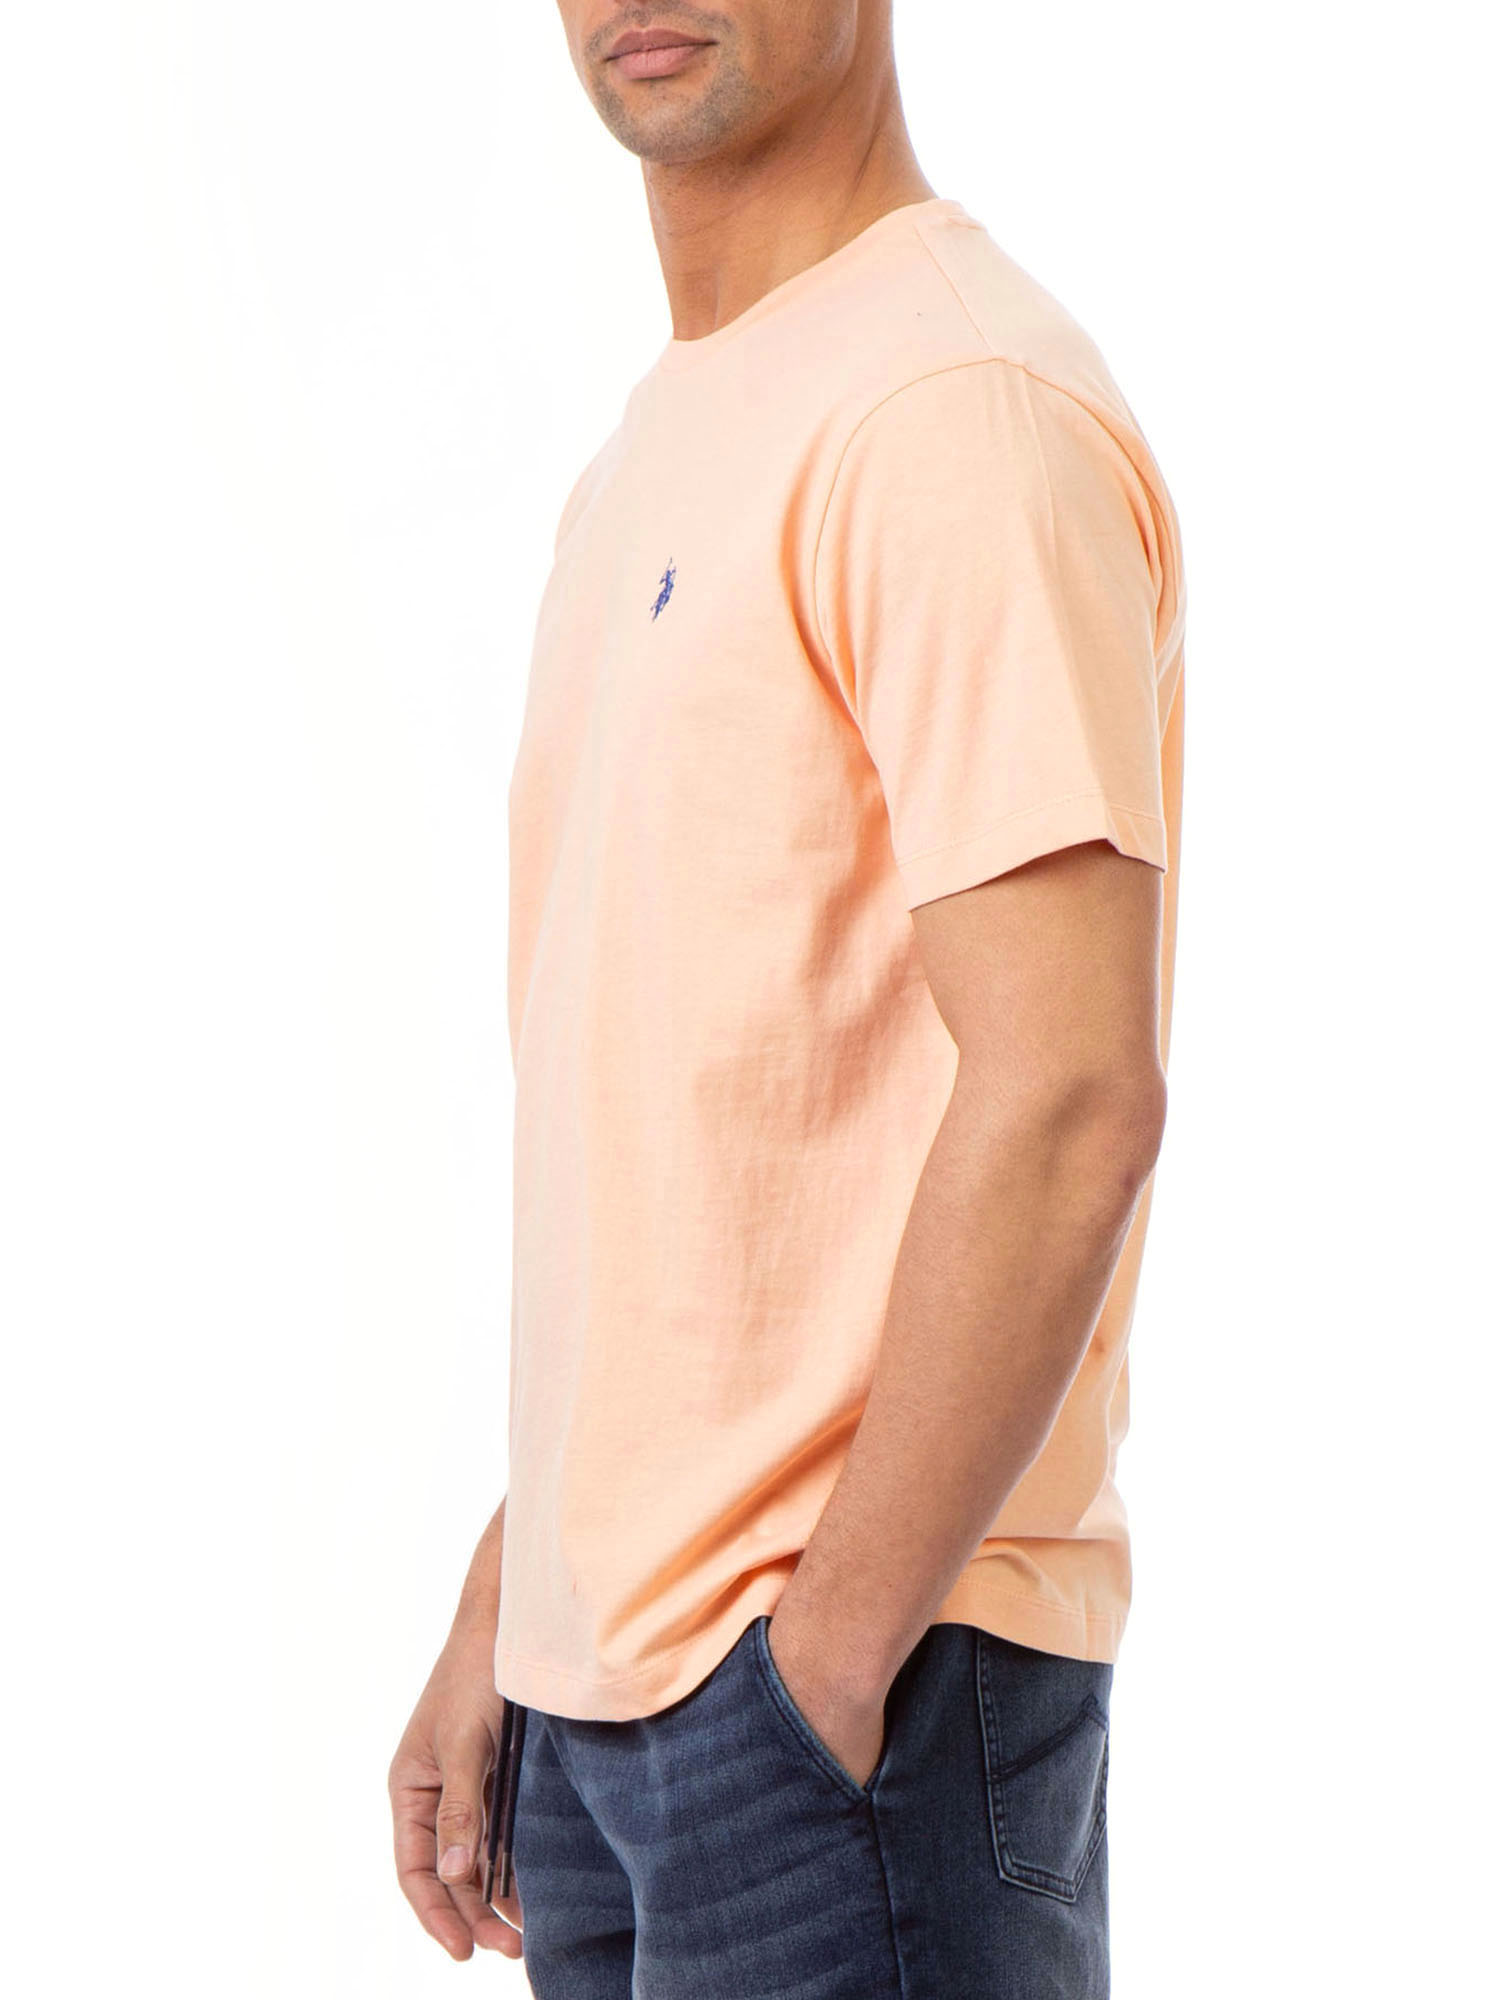 U.S. Polo Assn. Men's Short Sleeve Crew Neck T-Shirt - image 4 of 4